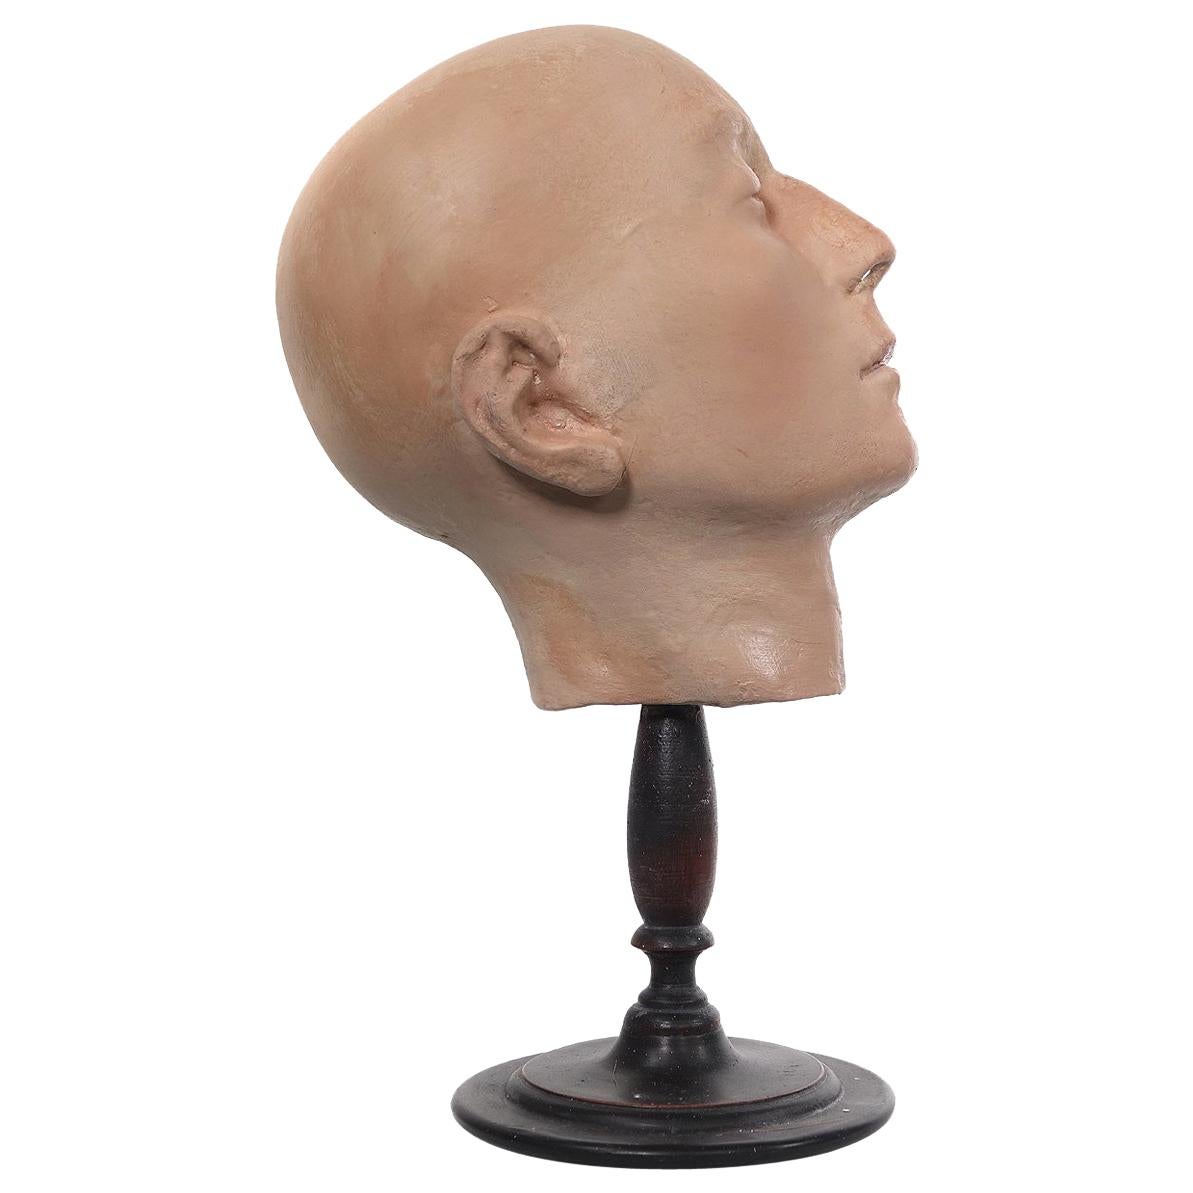 Early Anatomical Half Head Model